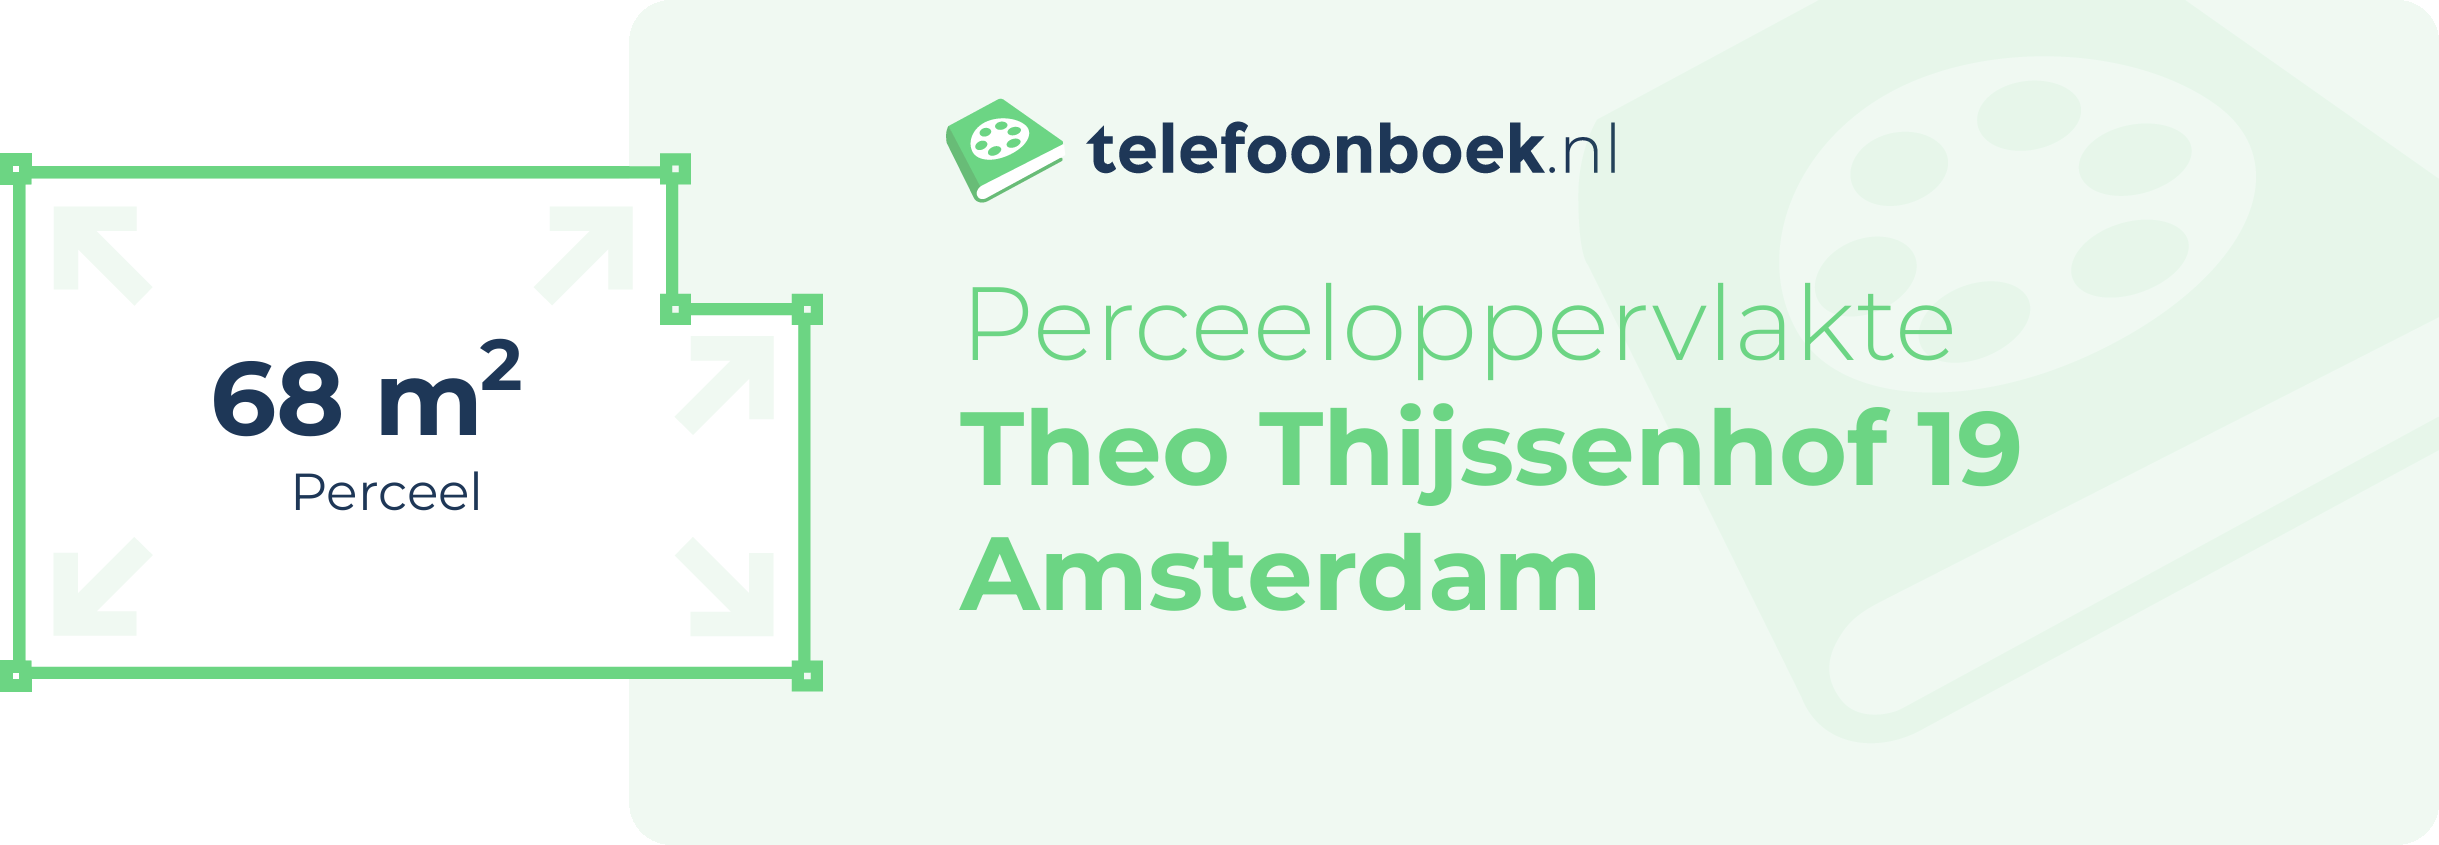 Perceeloppervlakte Theo Thijssenhof 19 Amsterdam